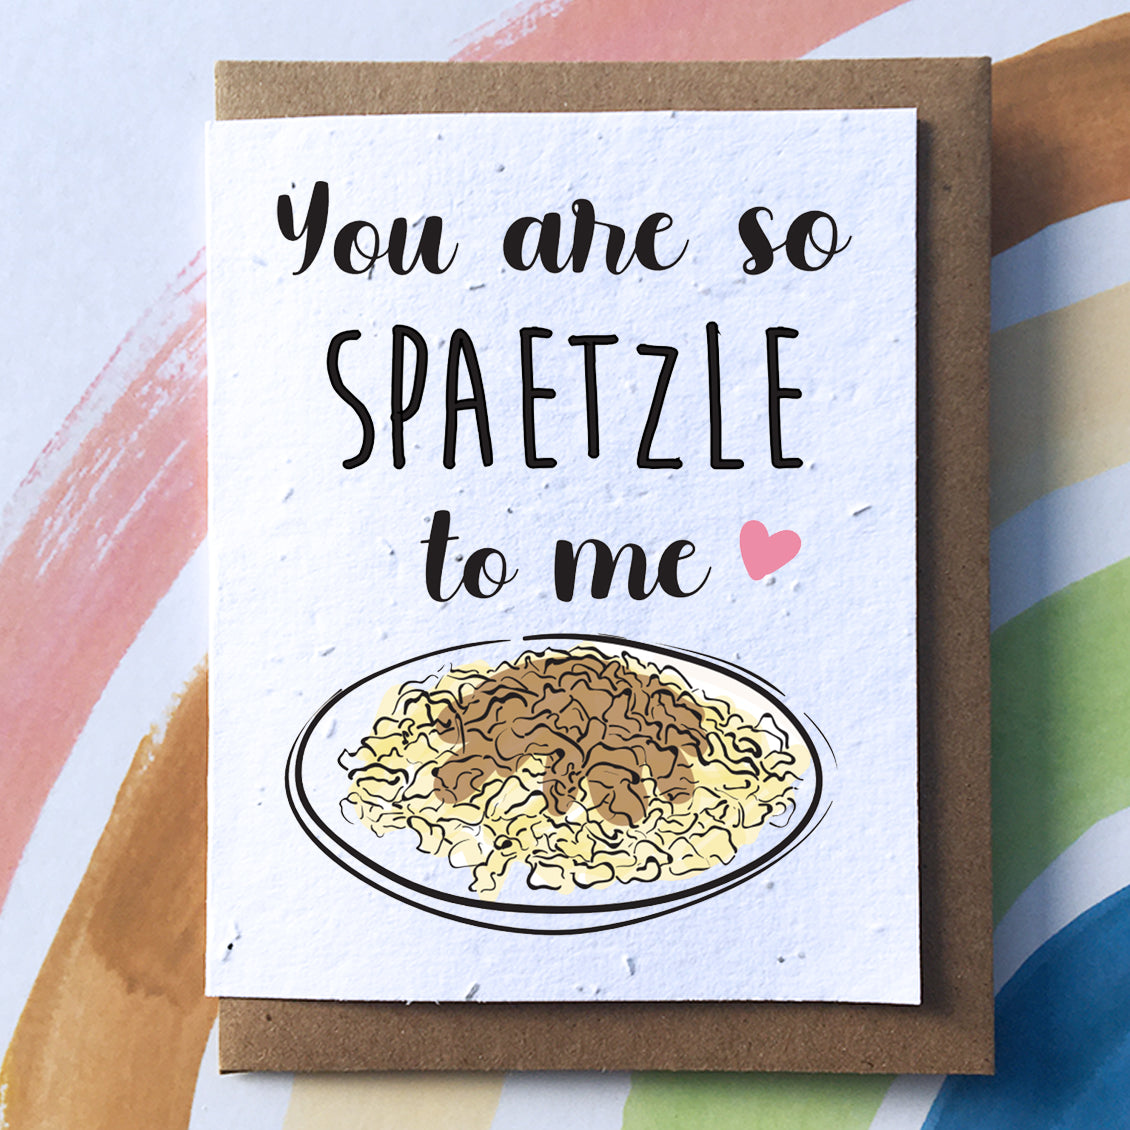 You're Spaetzle